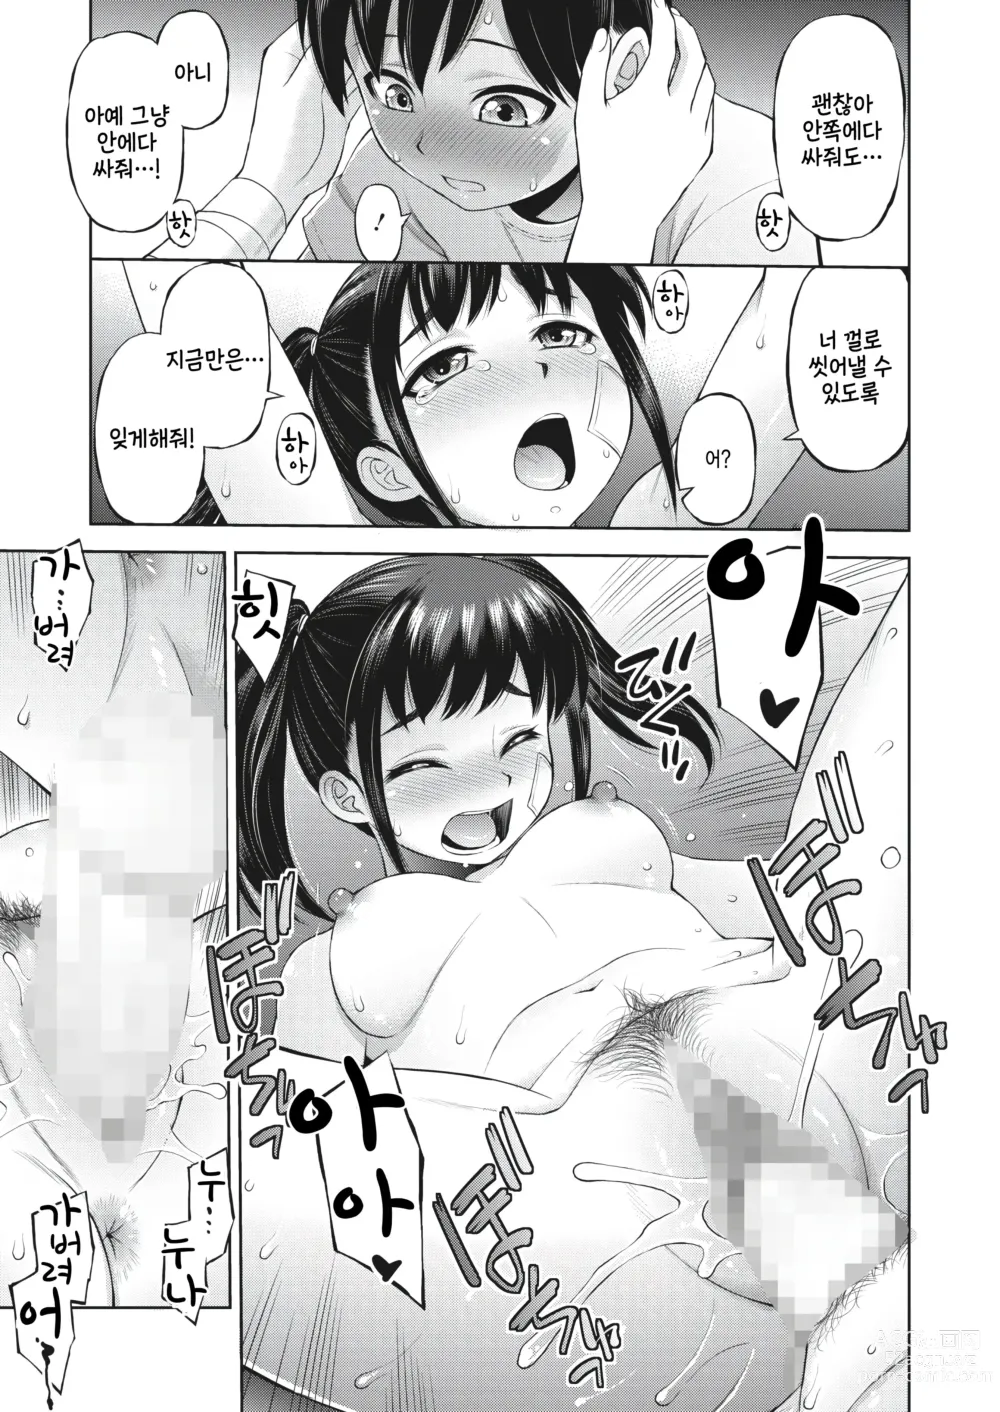 Page 19 of manga Kanojo to Ore no Jikan